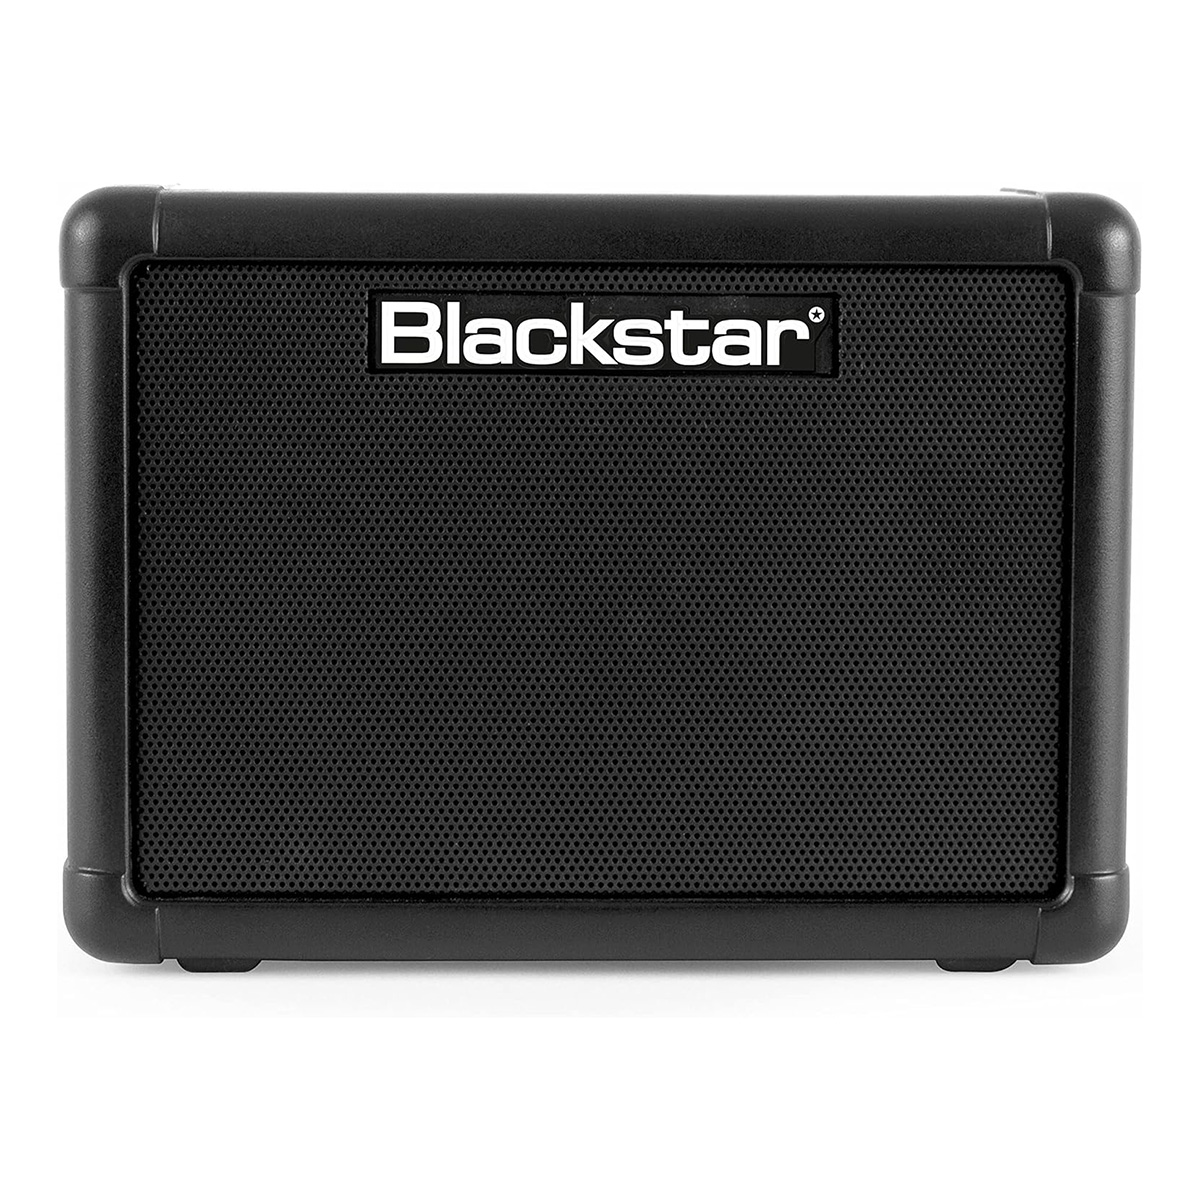 Blackstar черный Star FLY103 Mini гитарный усилитель шкаф 